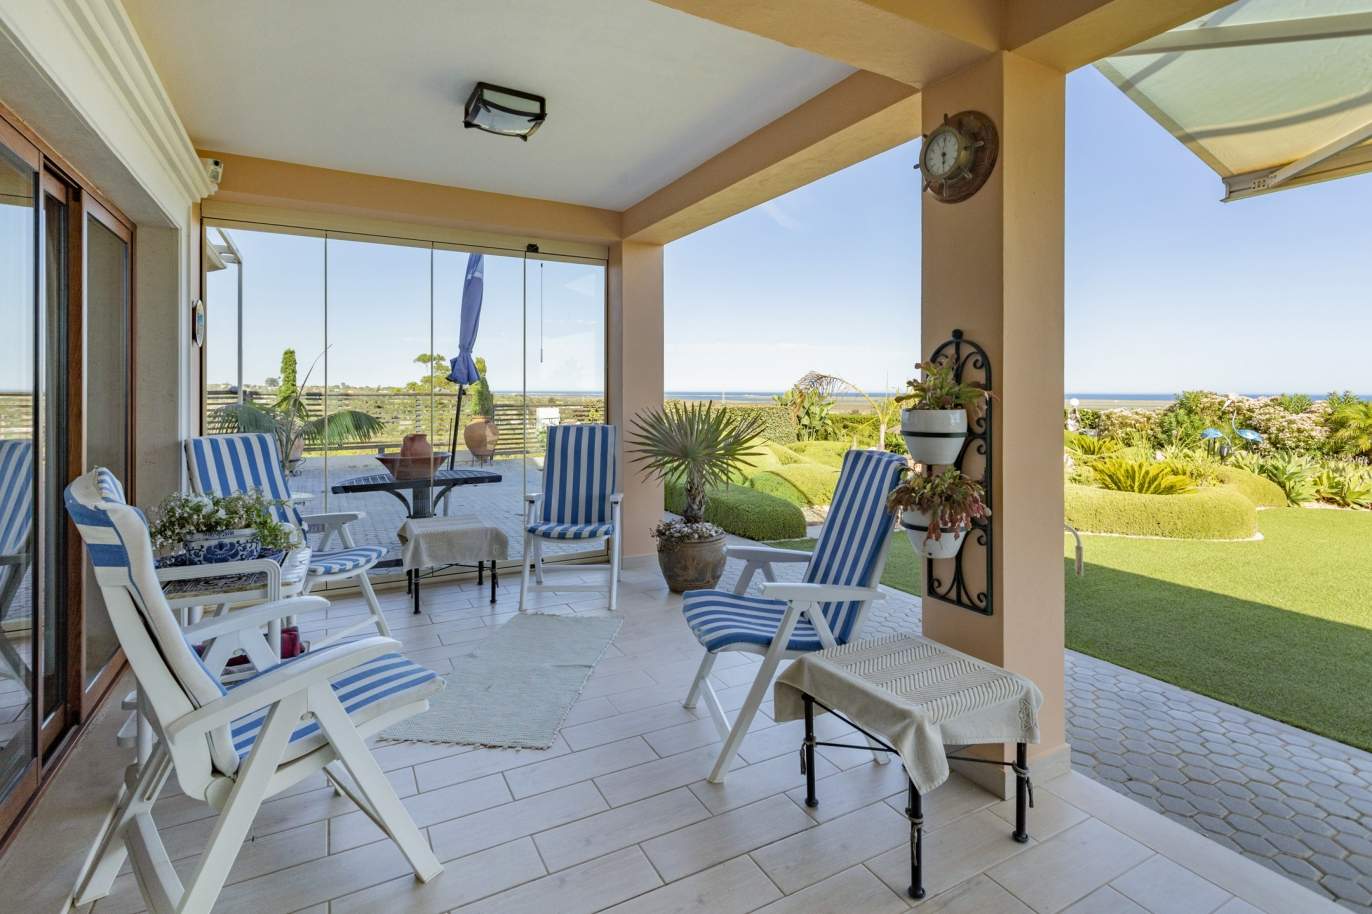 Magnificent 3 bedroom villa with sea view for sale in Olhão, Algarve_205670